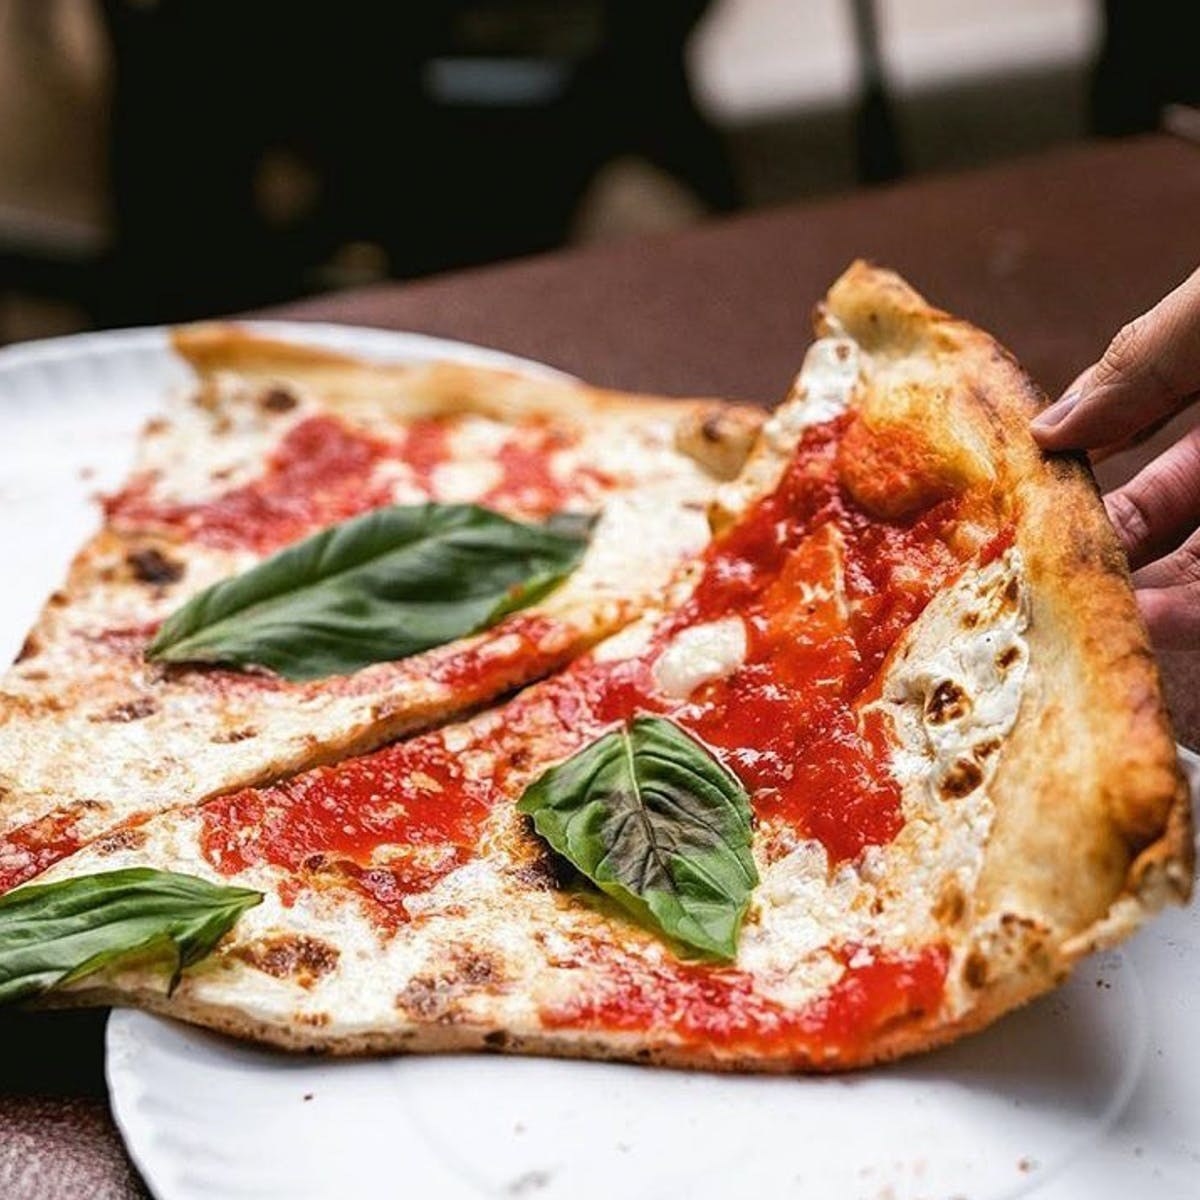 a slice of pizza with tomato sauce, fresh mozzarella, and basil